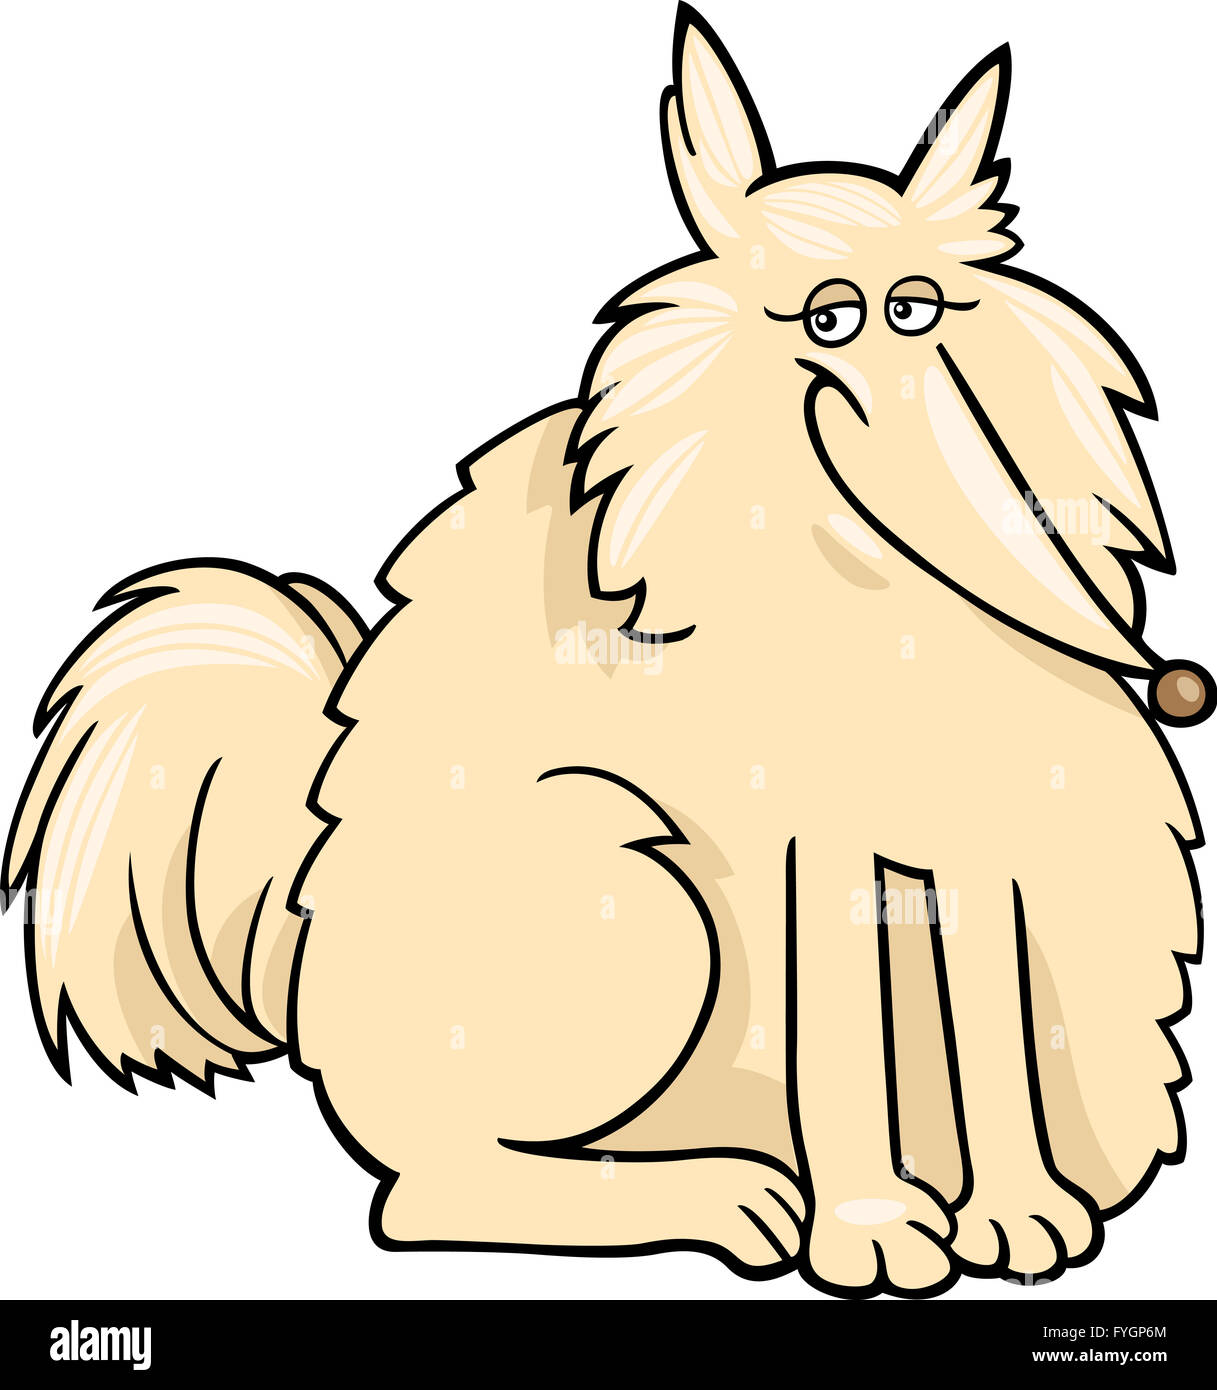 eskimo dog cartoon illustration Stock Photo